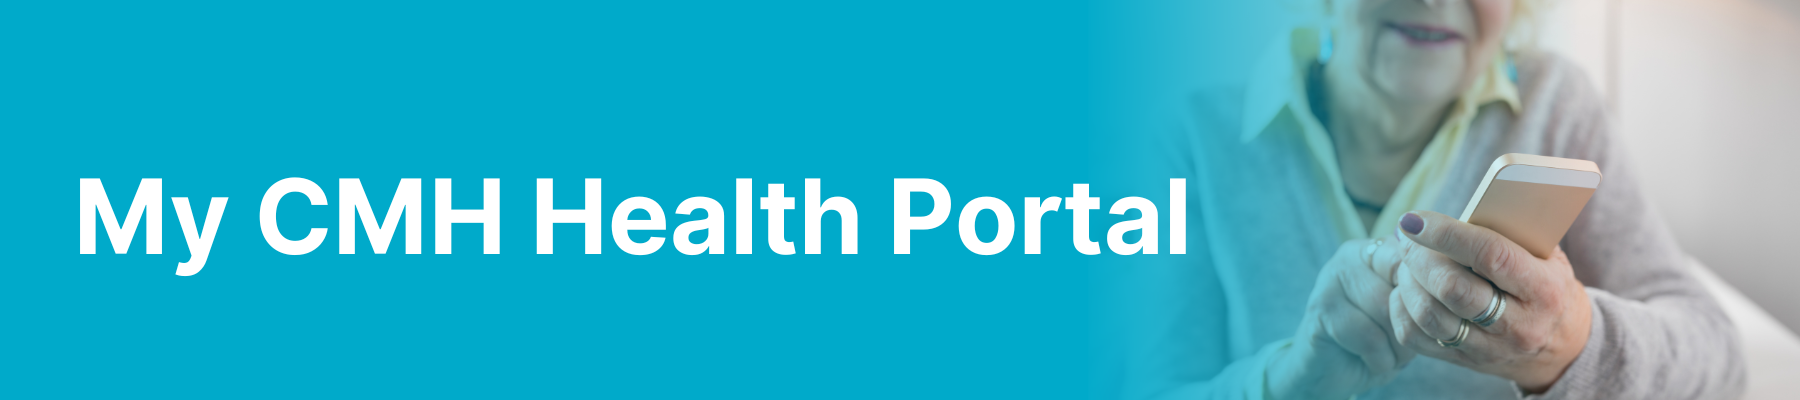 My CMH Health Portal at the Cloquet Hospital